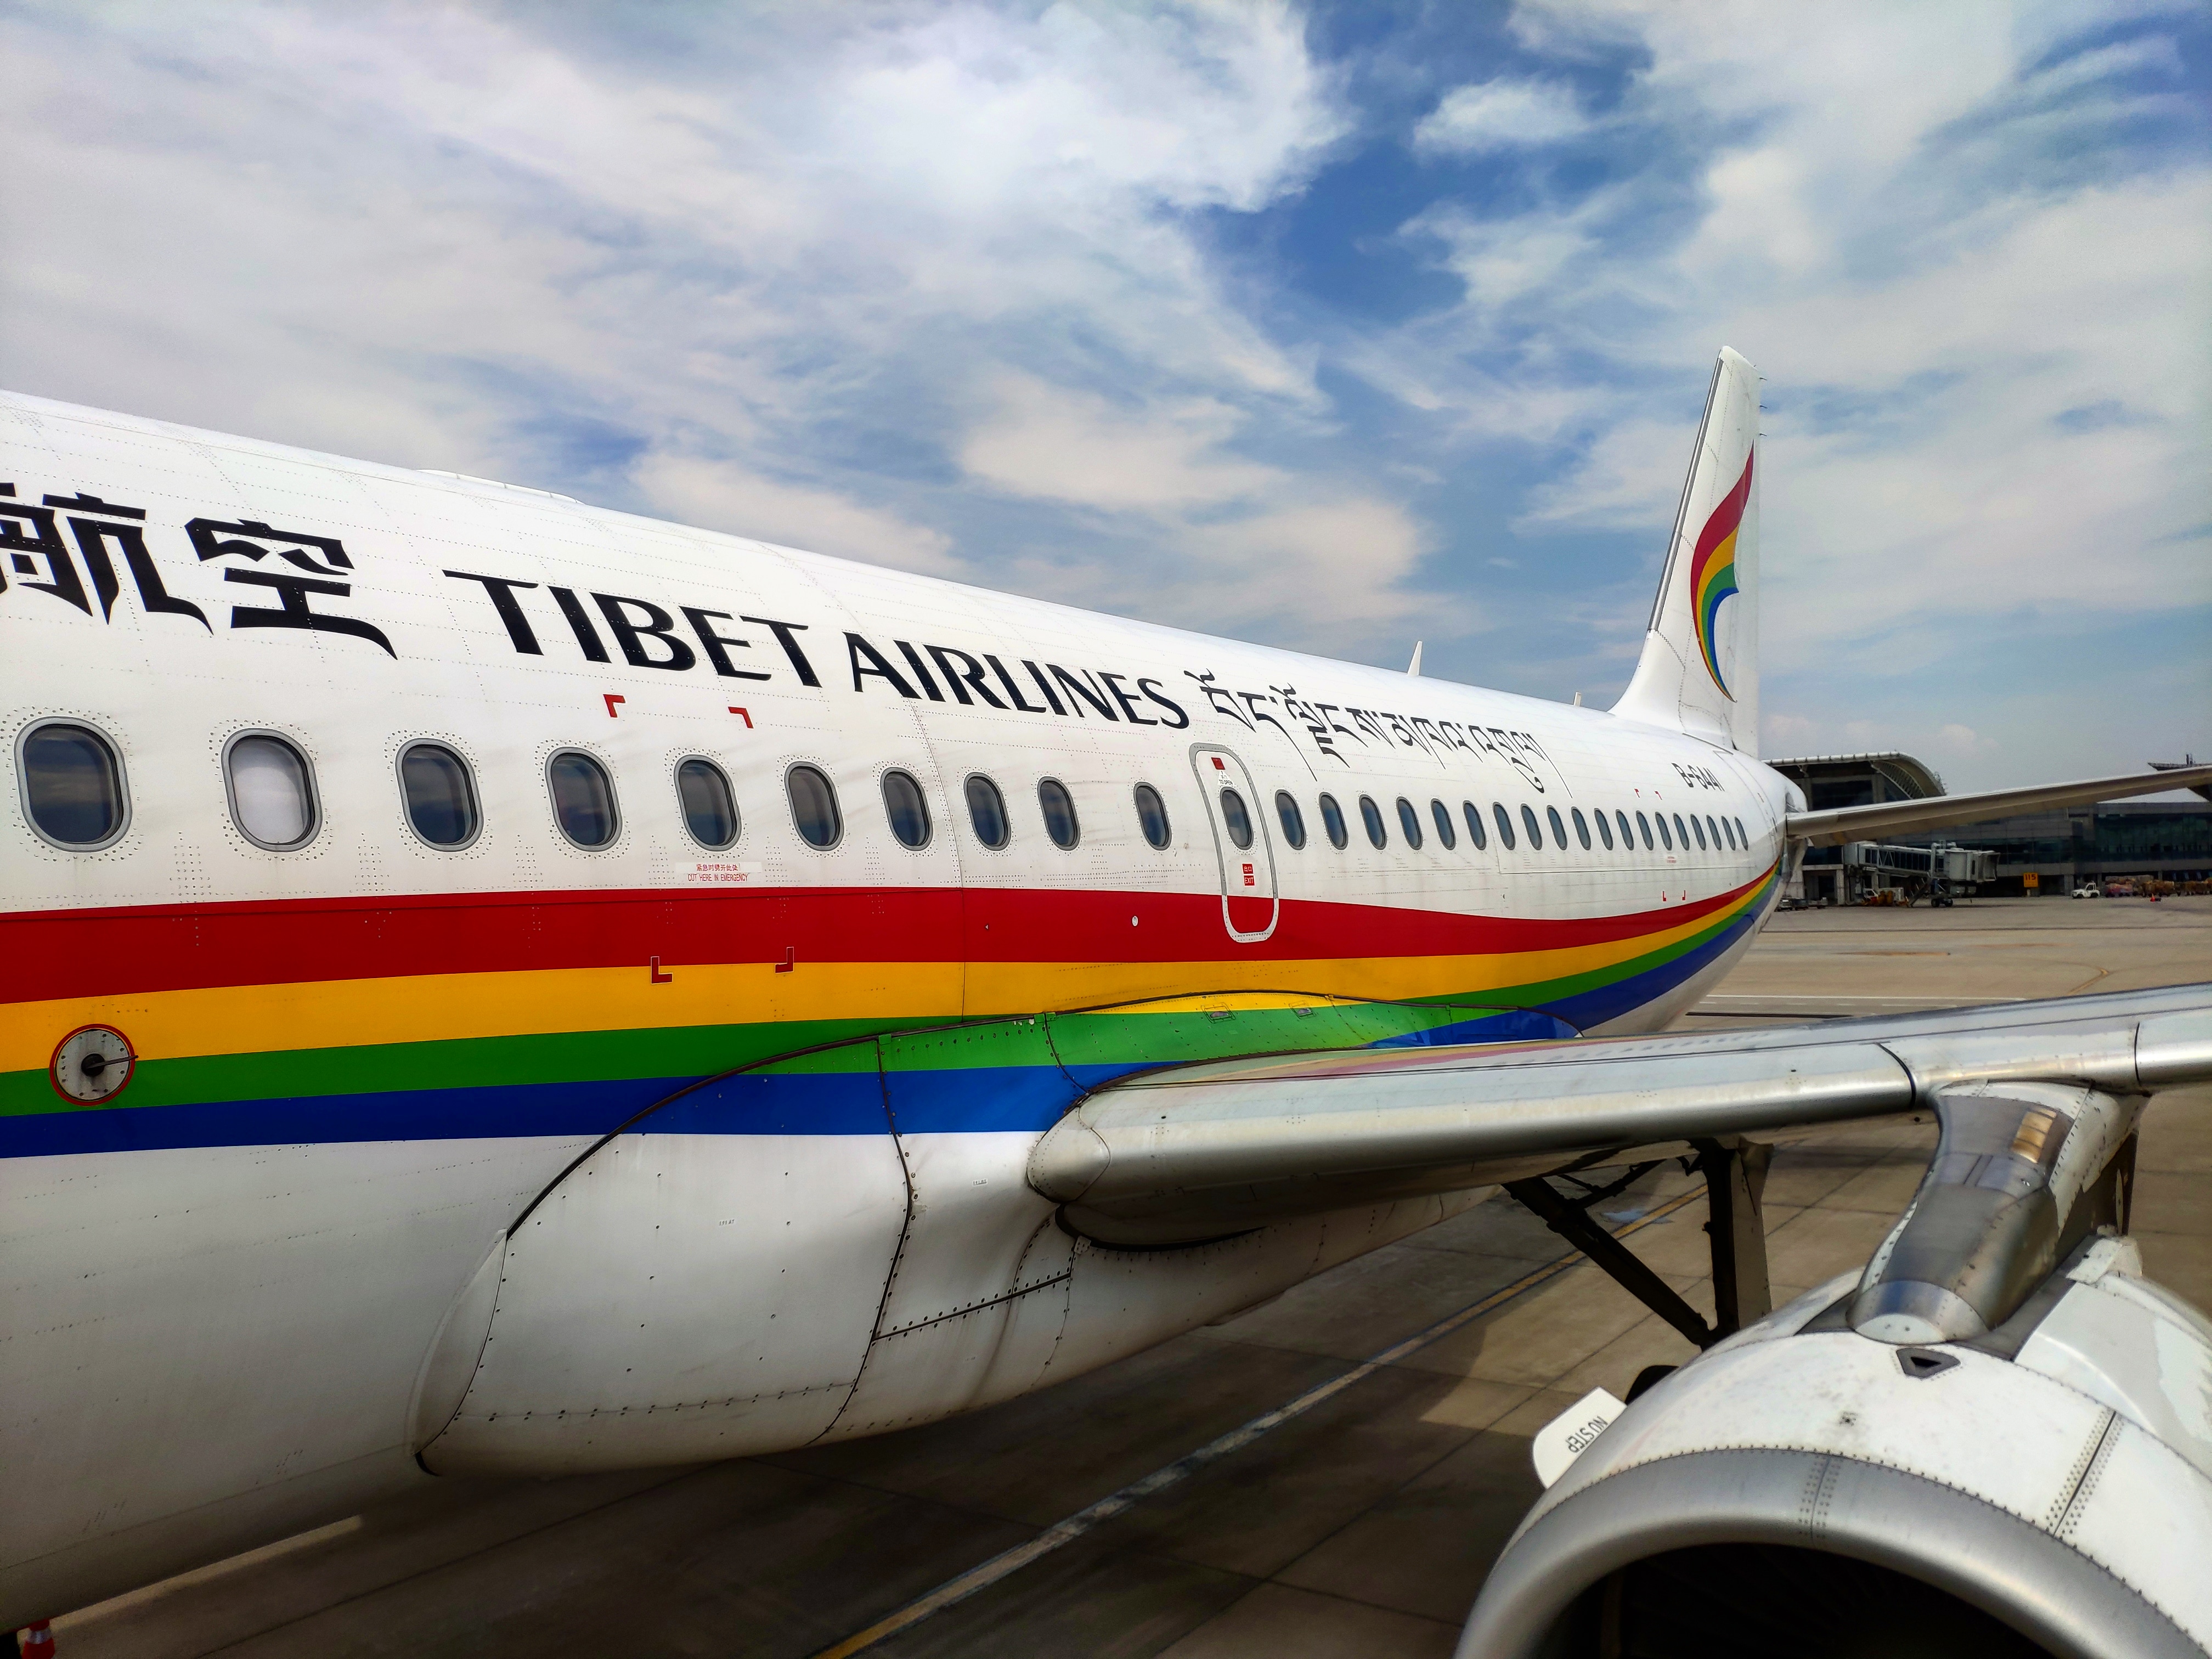 Tibet Airlines' plane